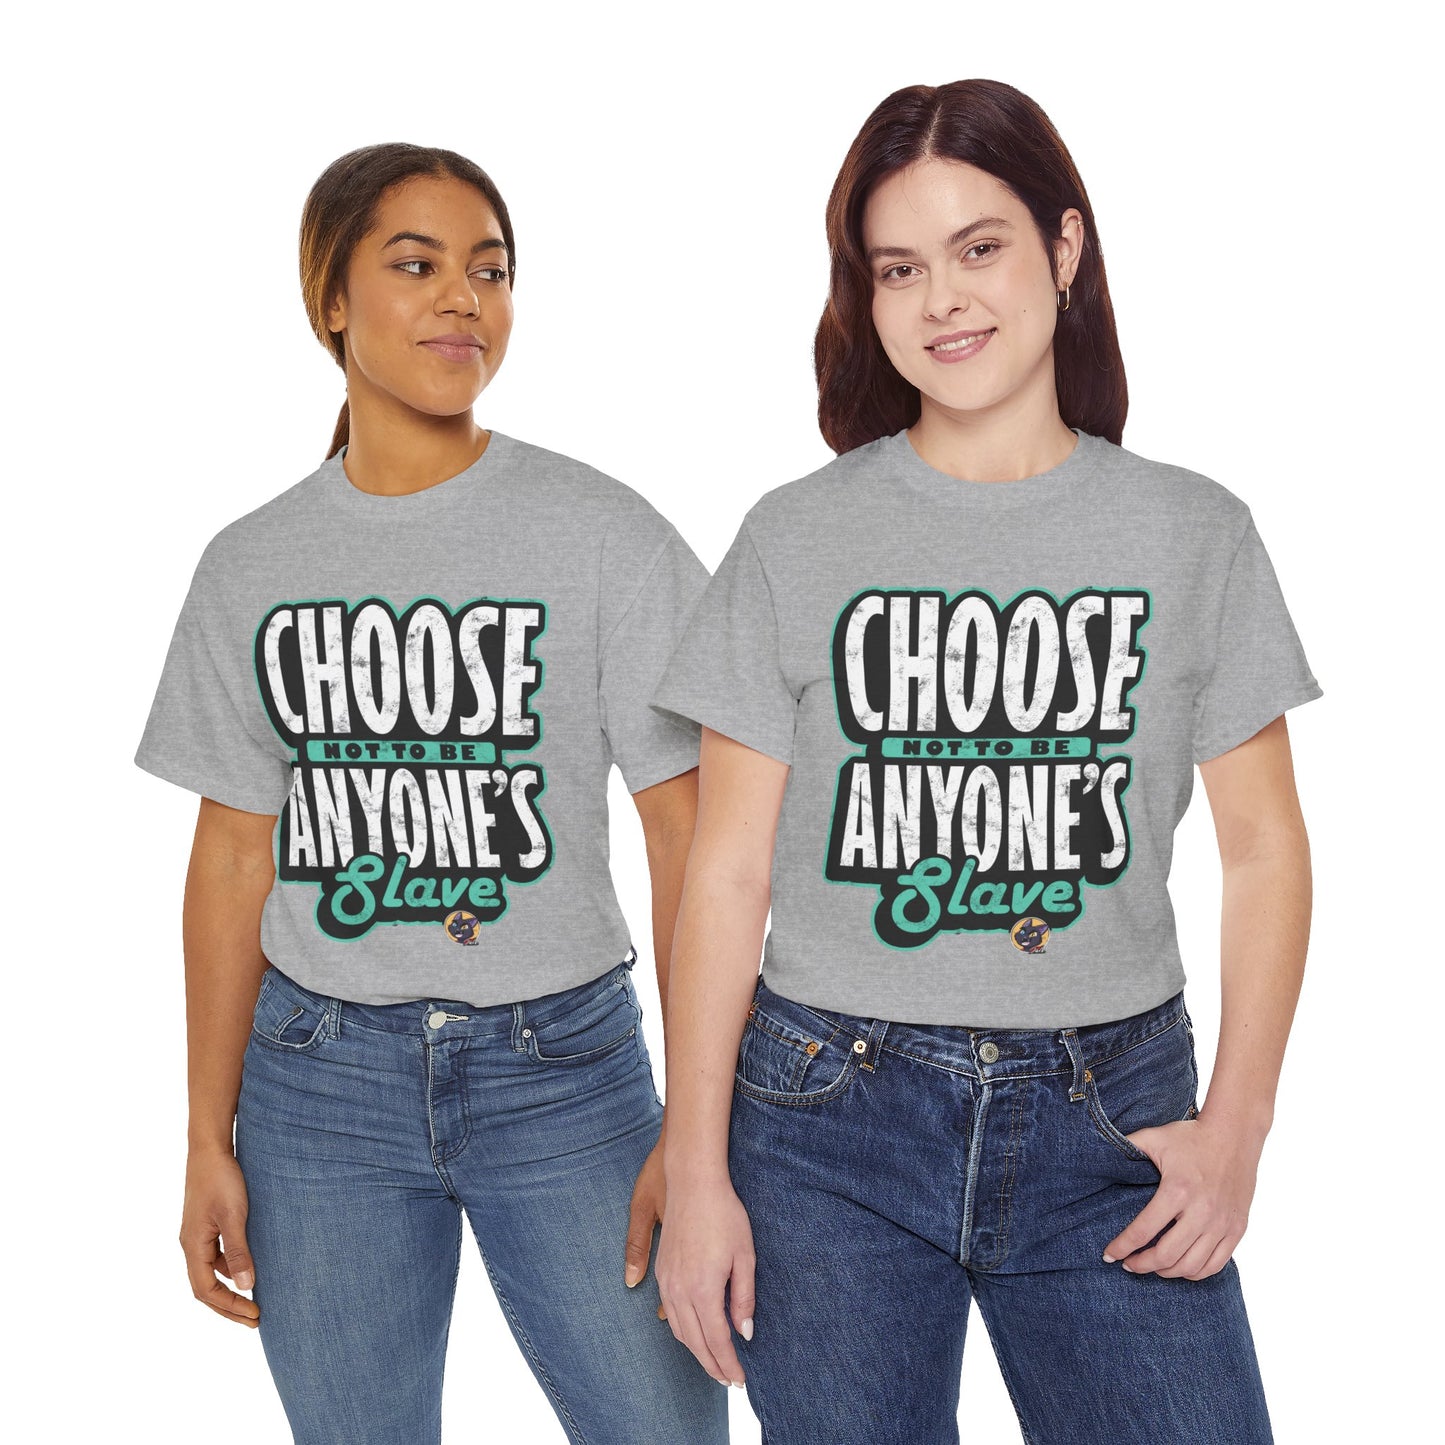 The Deep Secret T-Shirt: Choose not to be anyone's salve ﻿Jack